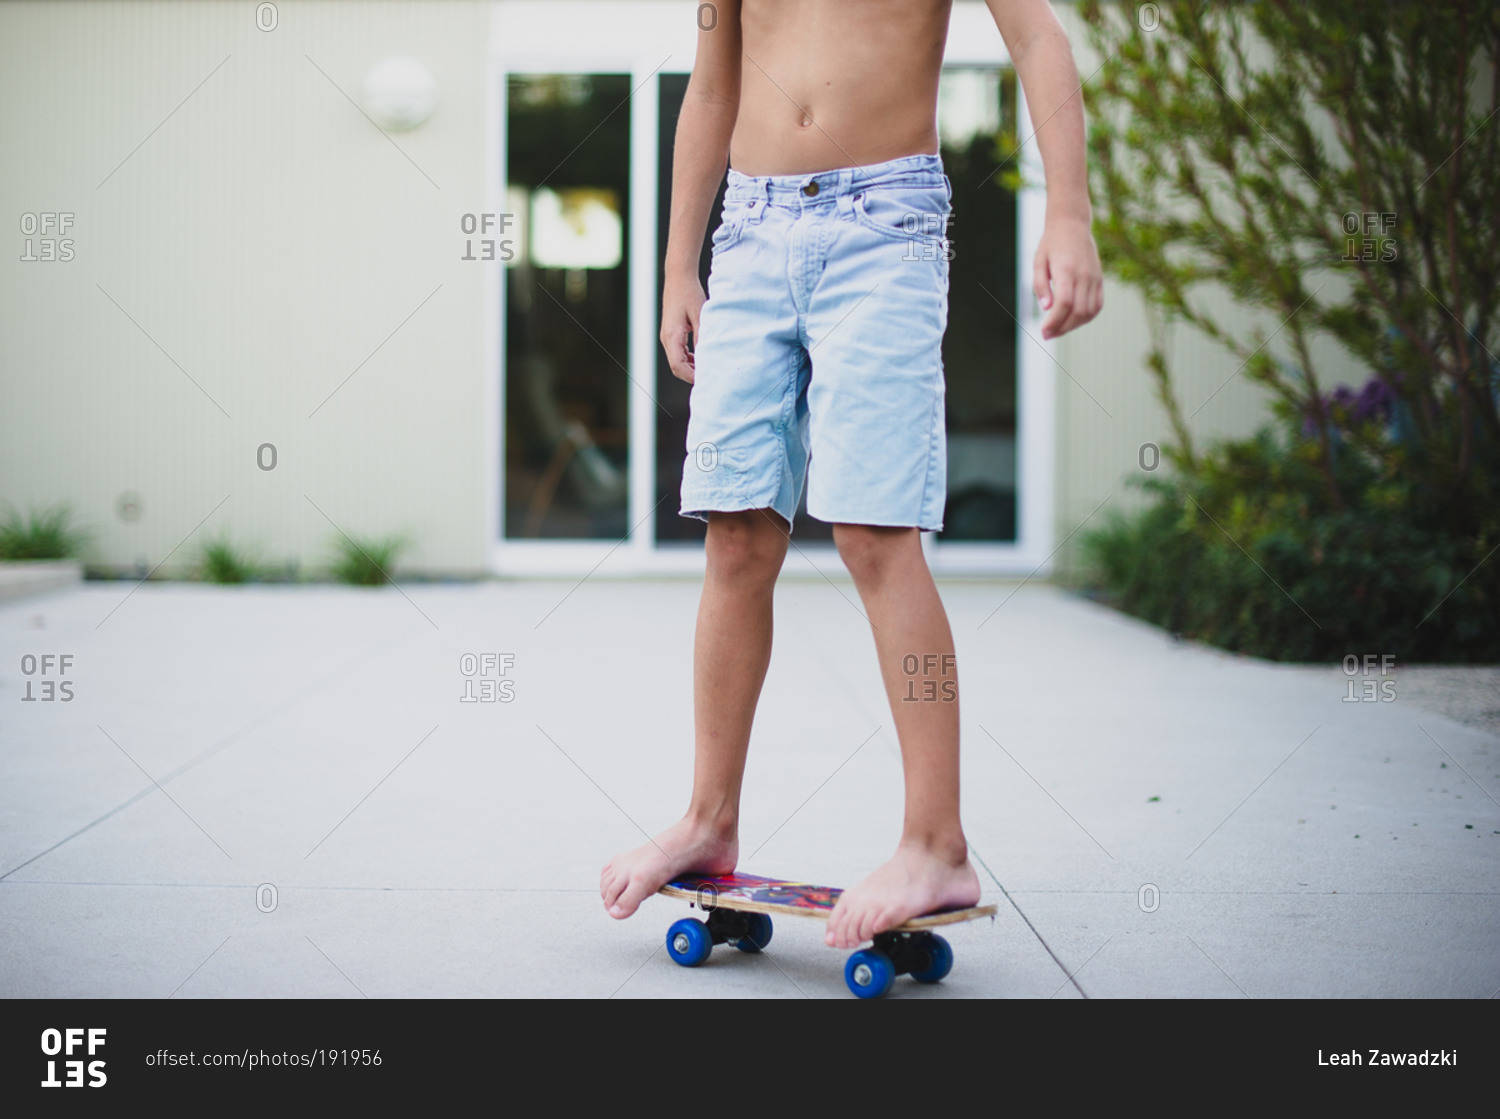 Legs and feet of boy standing still on skateboard